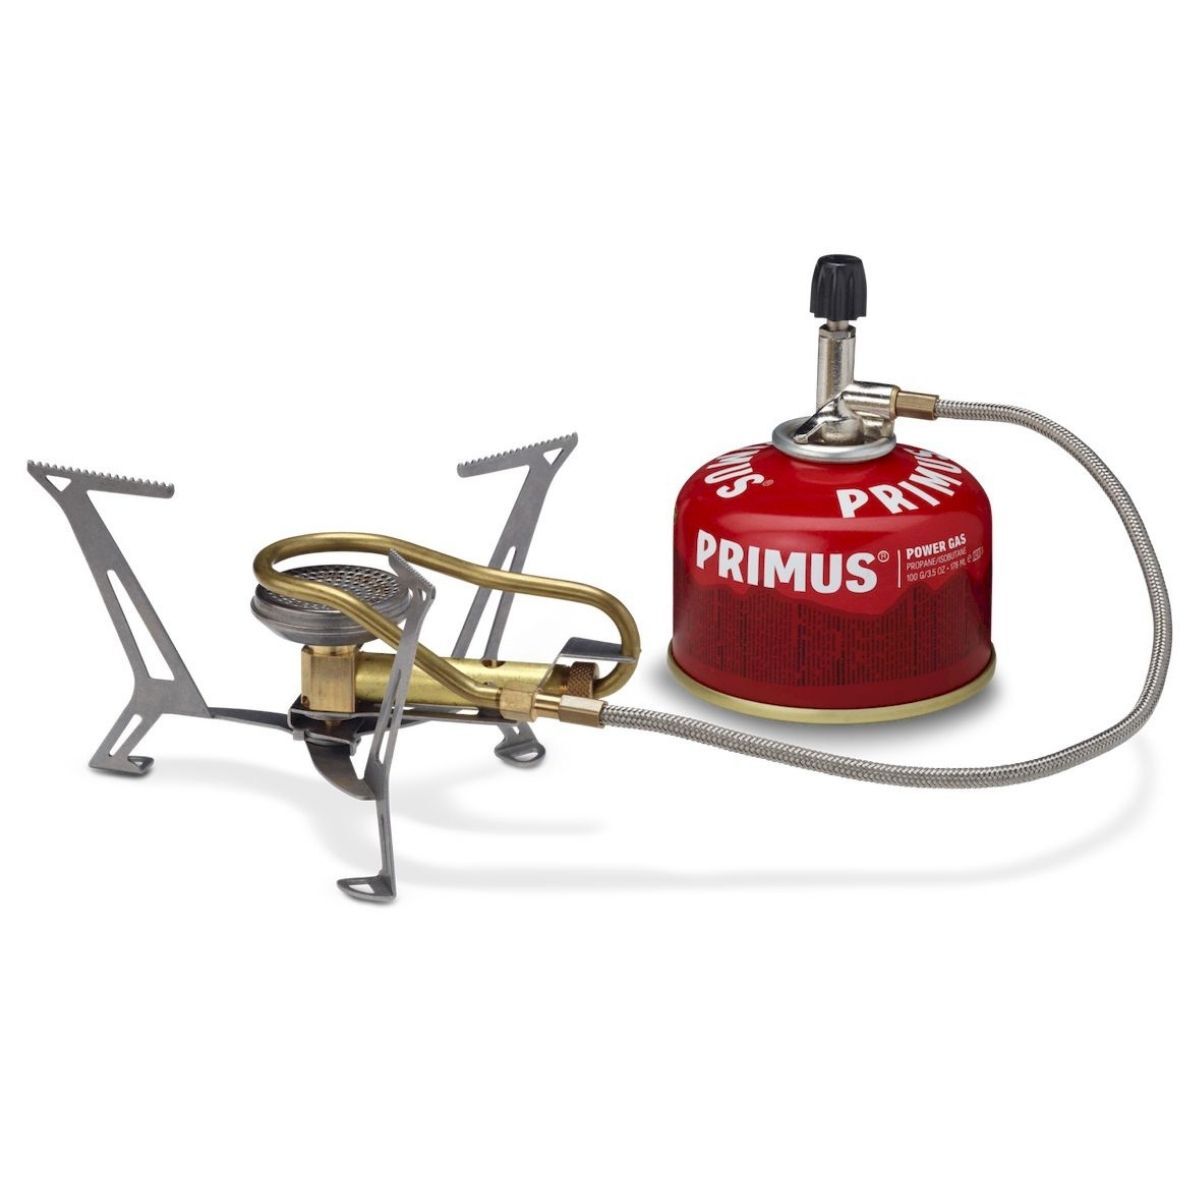 Primus Express Spider II - Hornillo de gas